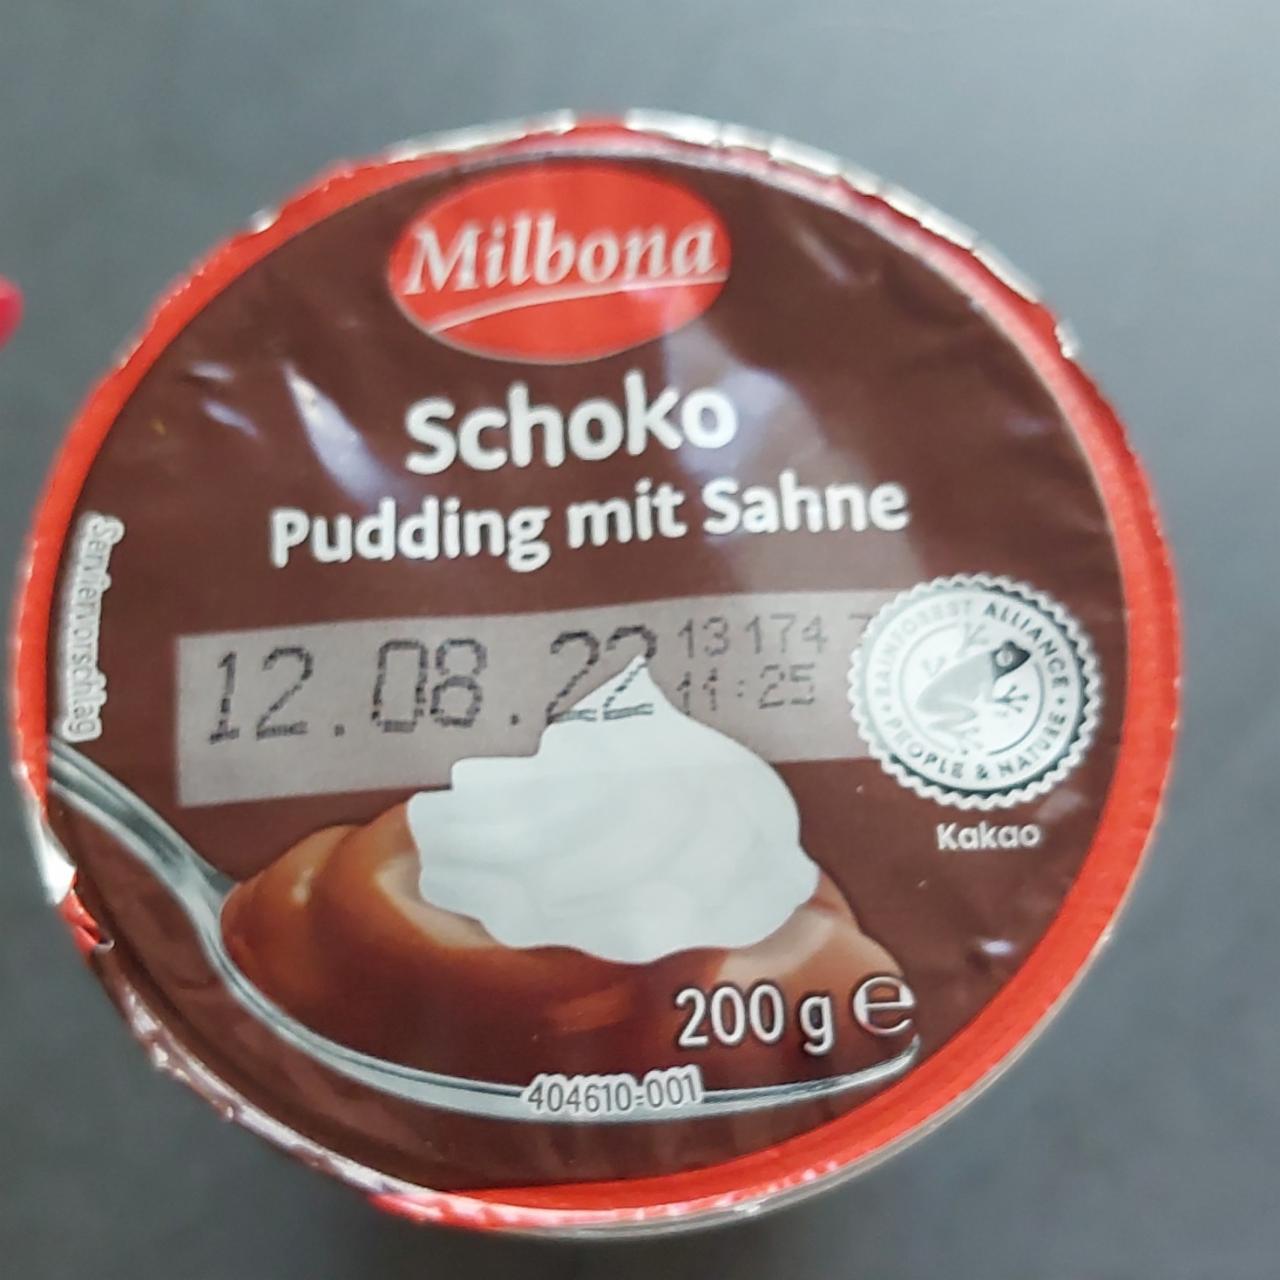 Fotografie - Schoko pudding mit sahne Milbona